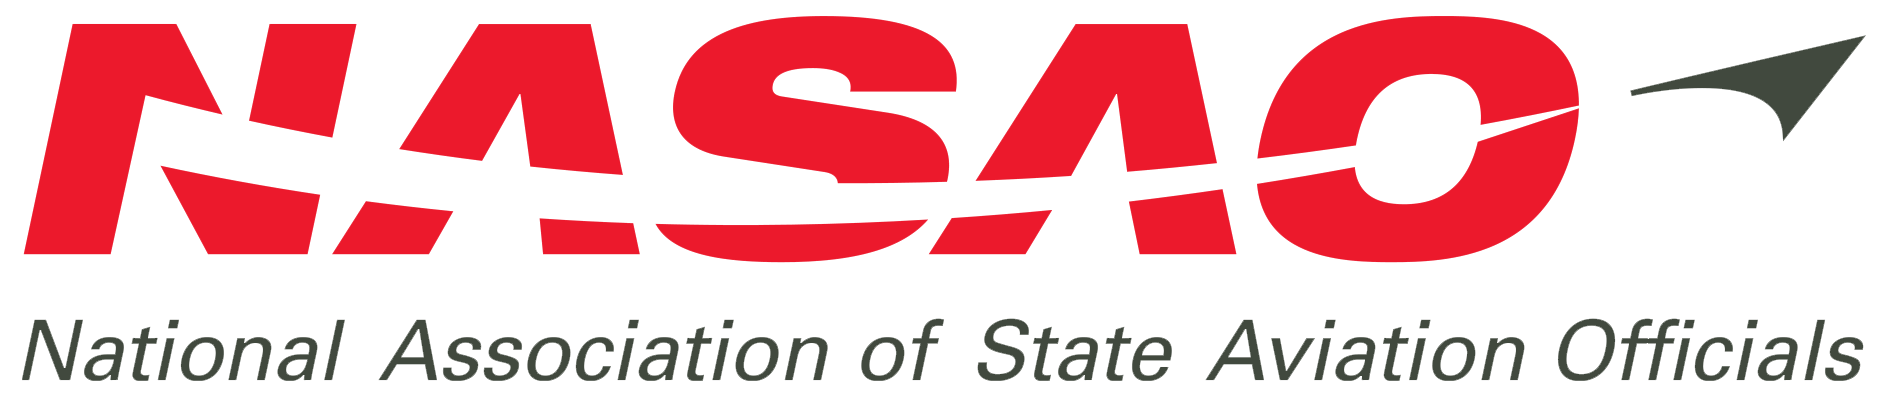 NASAO National Association of State Aviation Officials logo - ADK ...